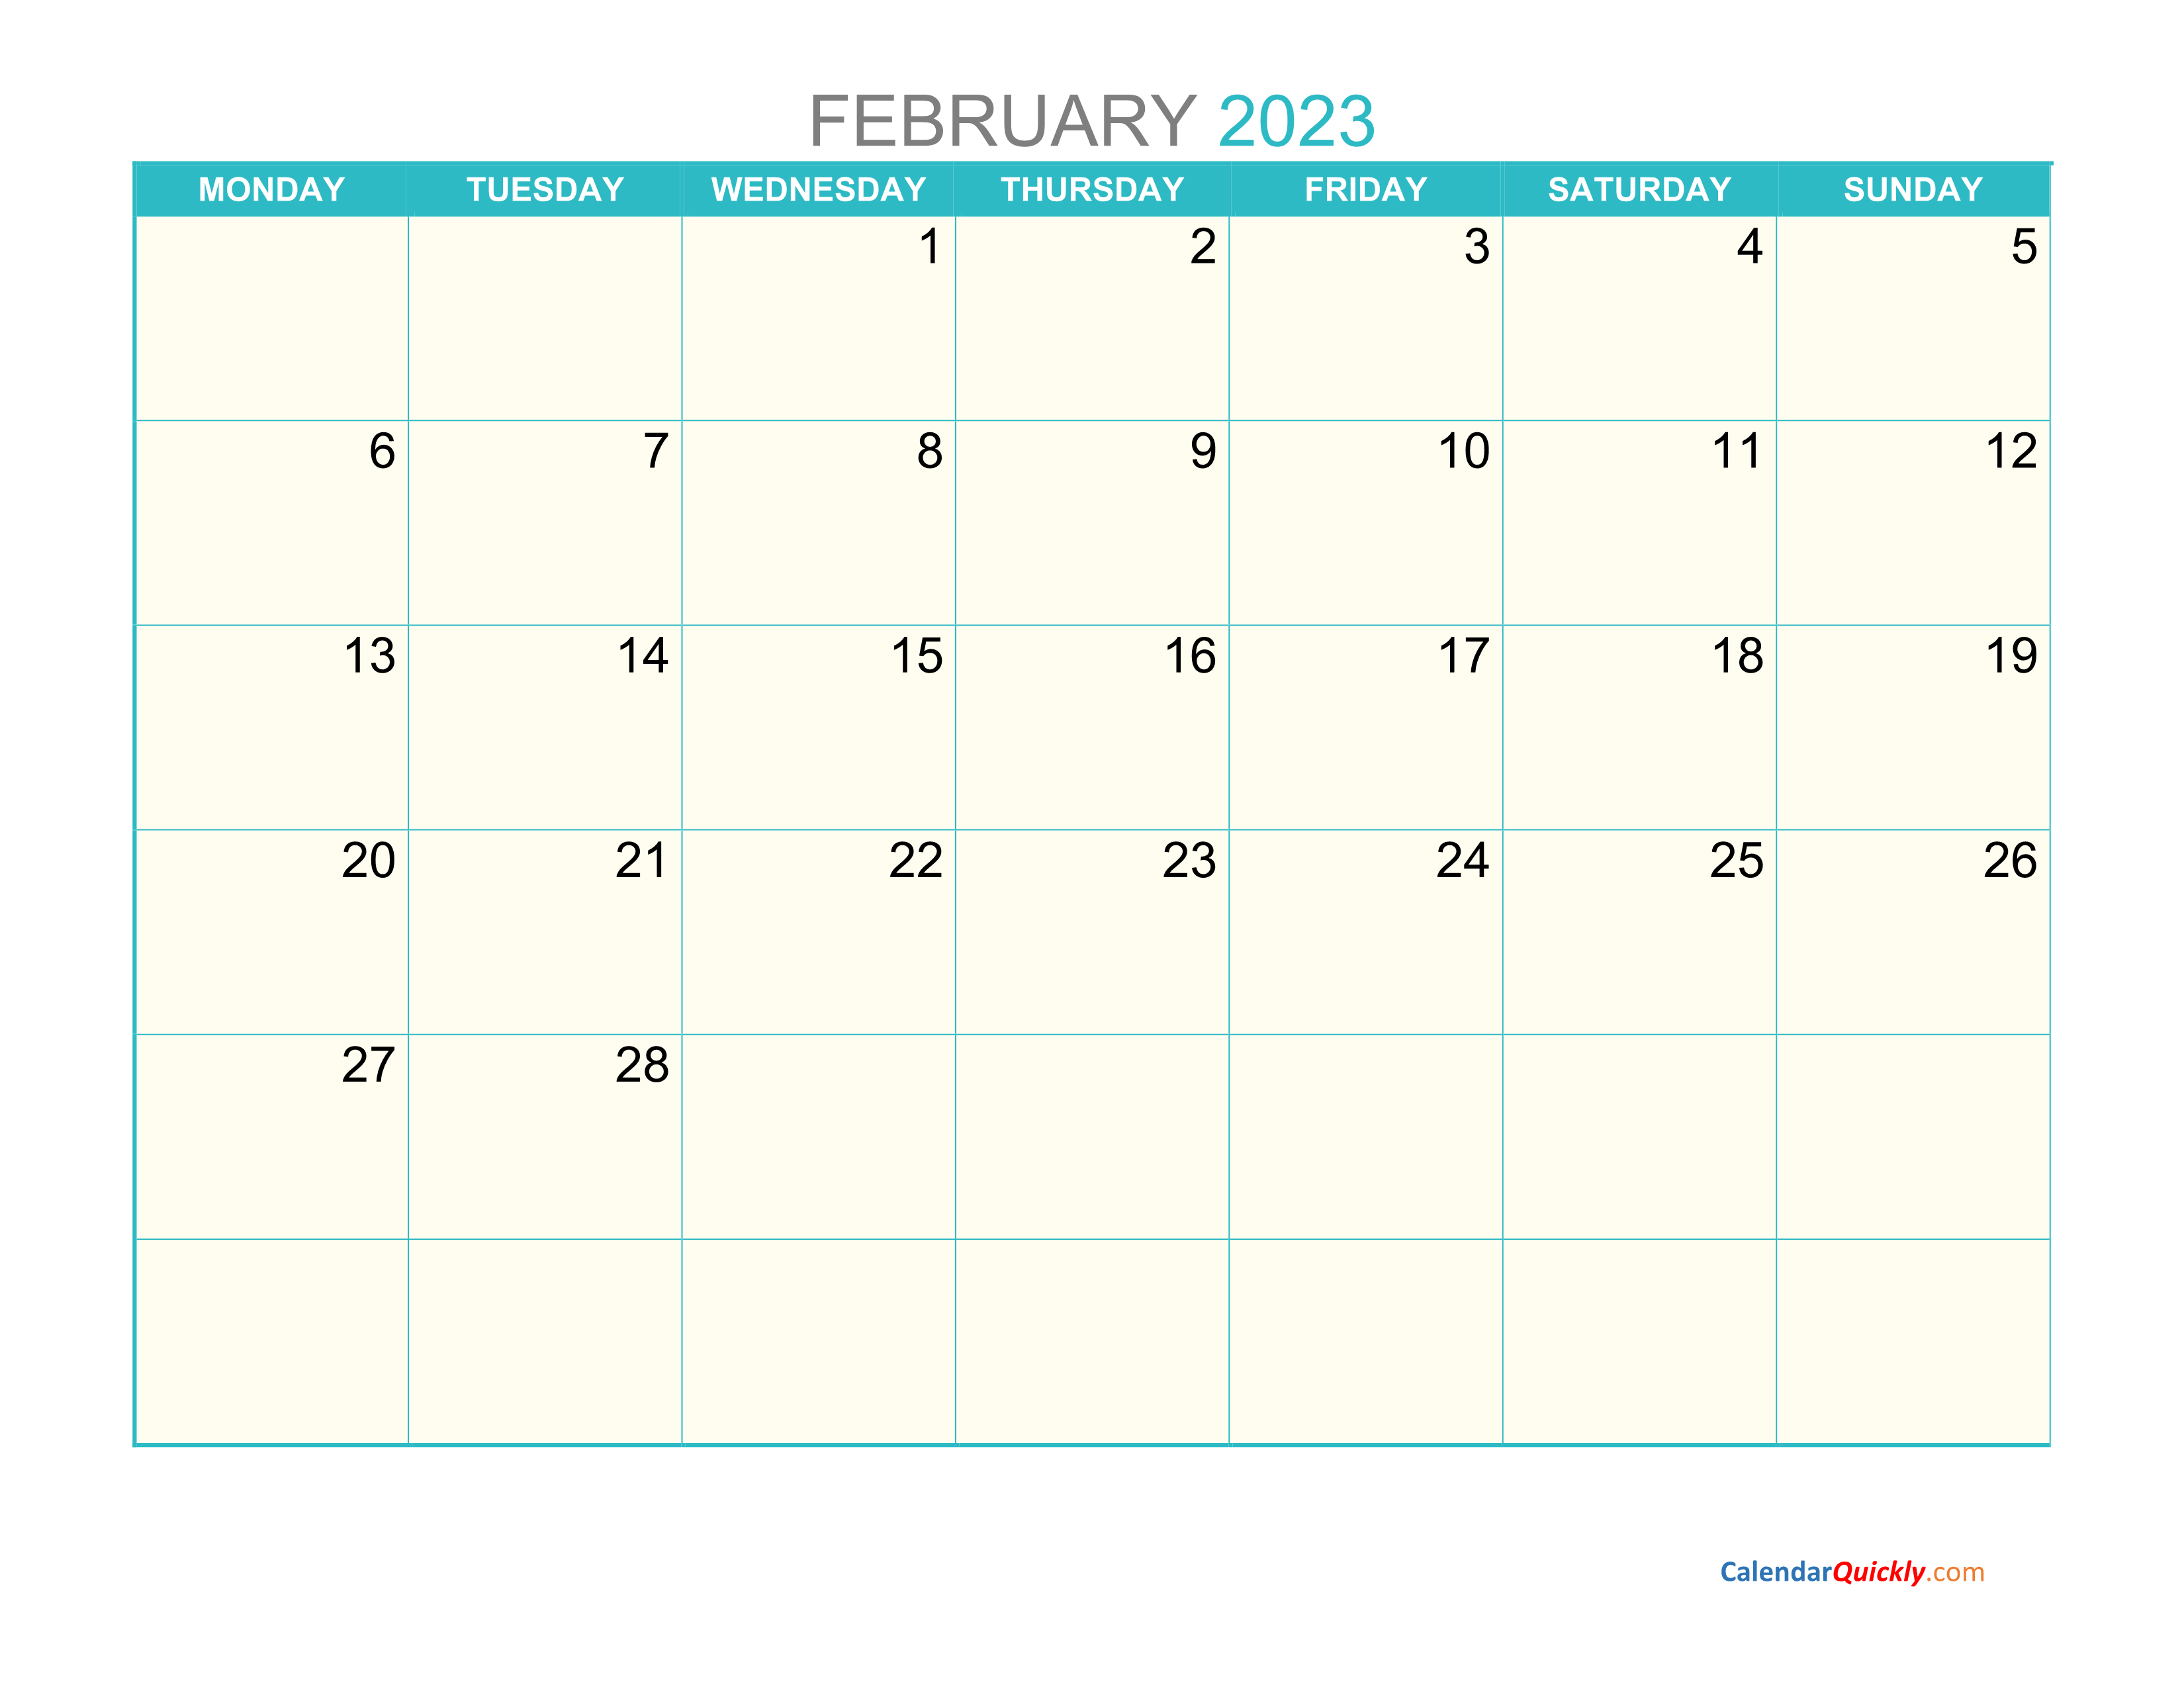 february-monday-2023-calendar-printable-calendar-quickly